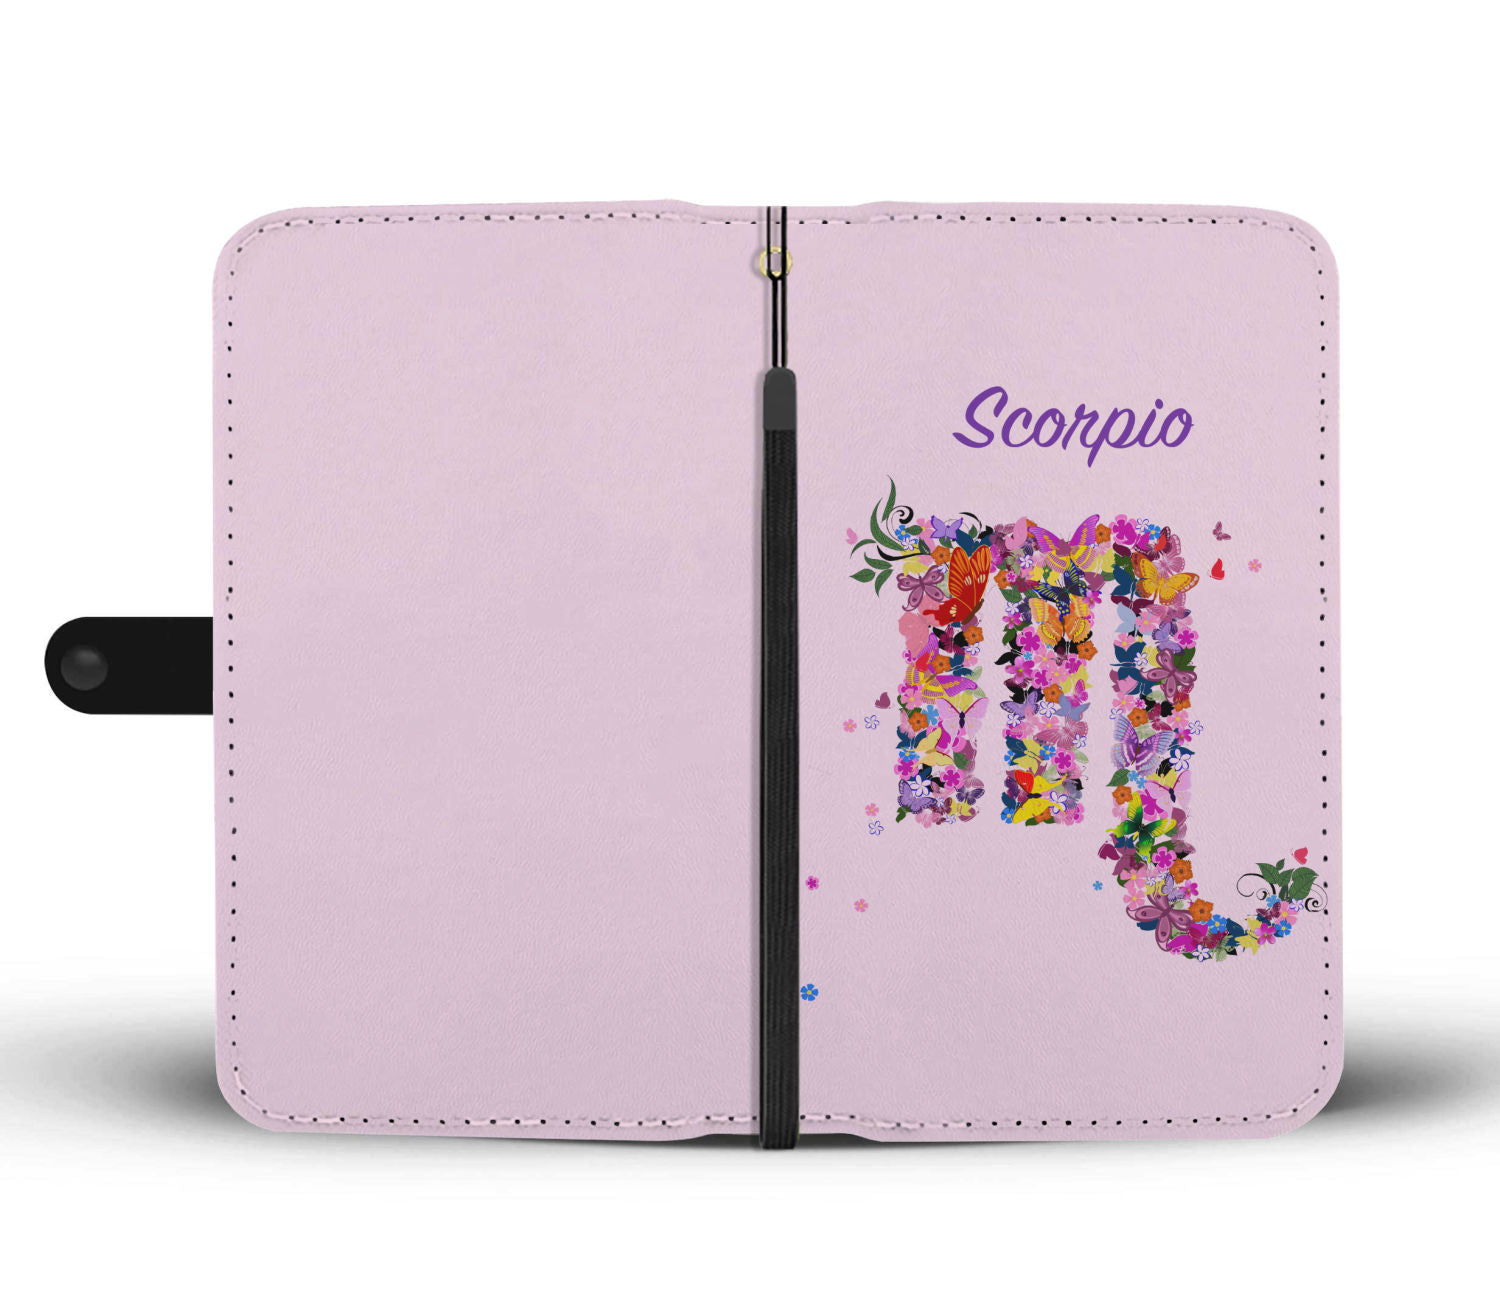 Scorpio Floral Phone Wallet